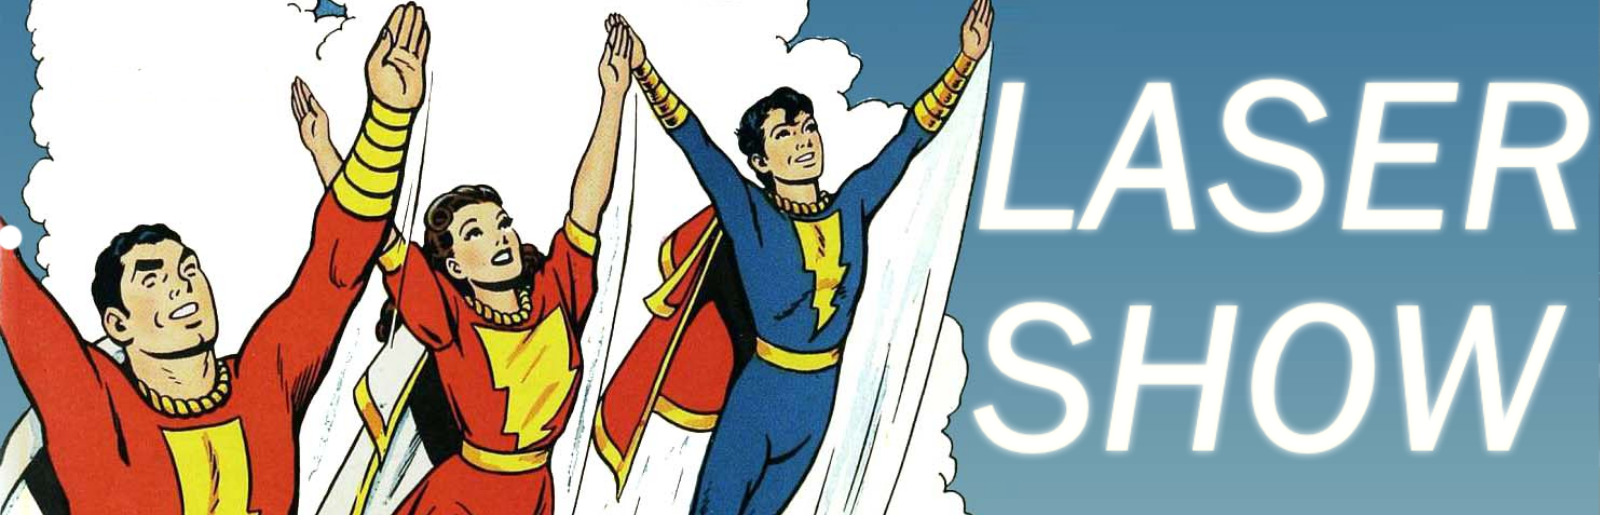 Laser Show 015: Captain Marvel